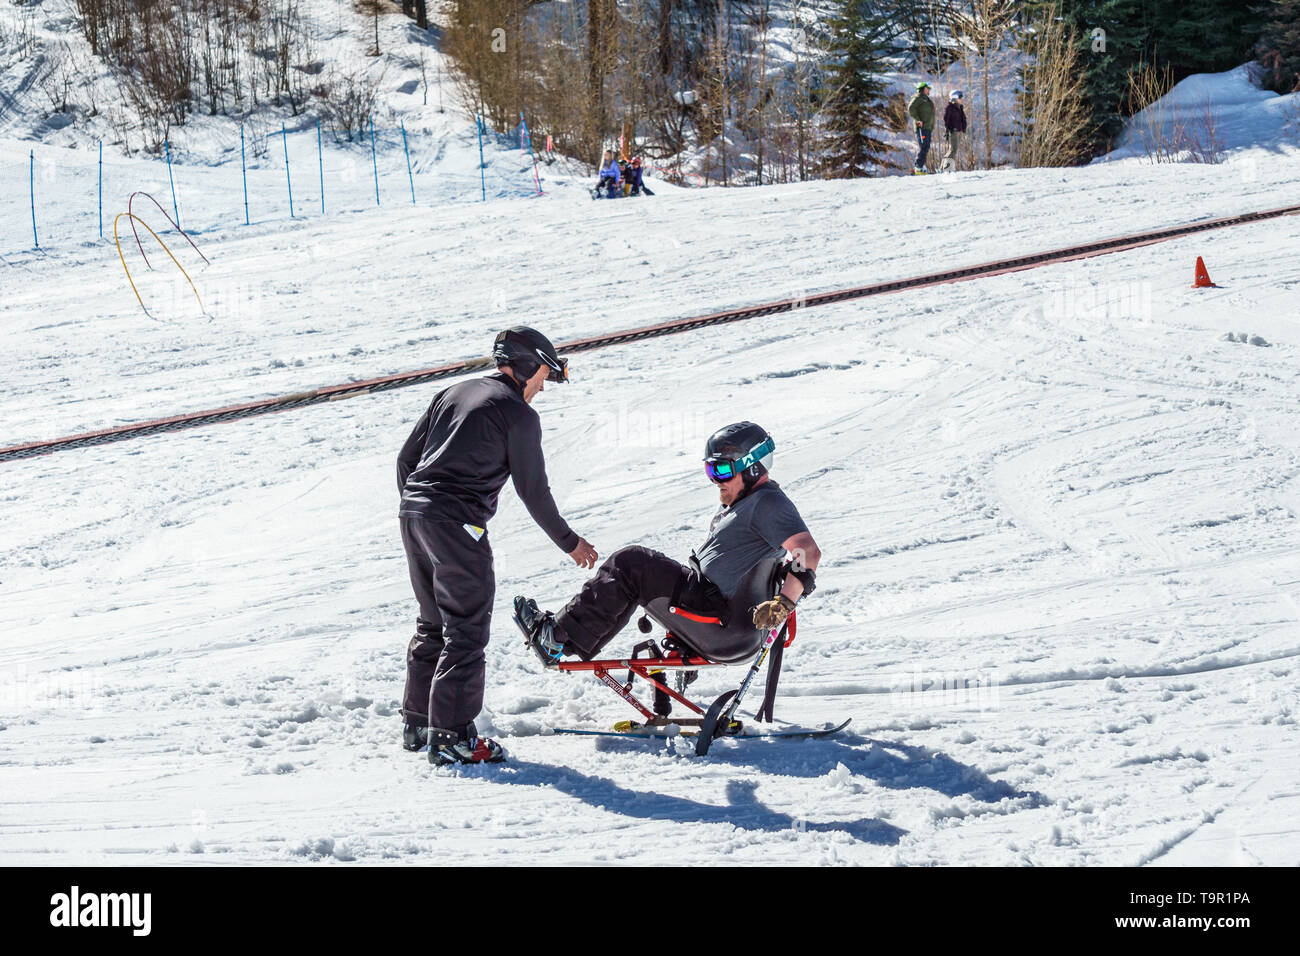 KIMBERLEY, CANADA - MARCH 19, 2019: handicapped person riding a mono ski Vancouver Adaptive Snow Sports Stock Photo